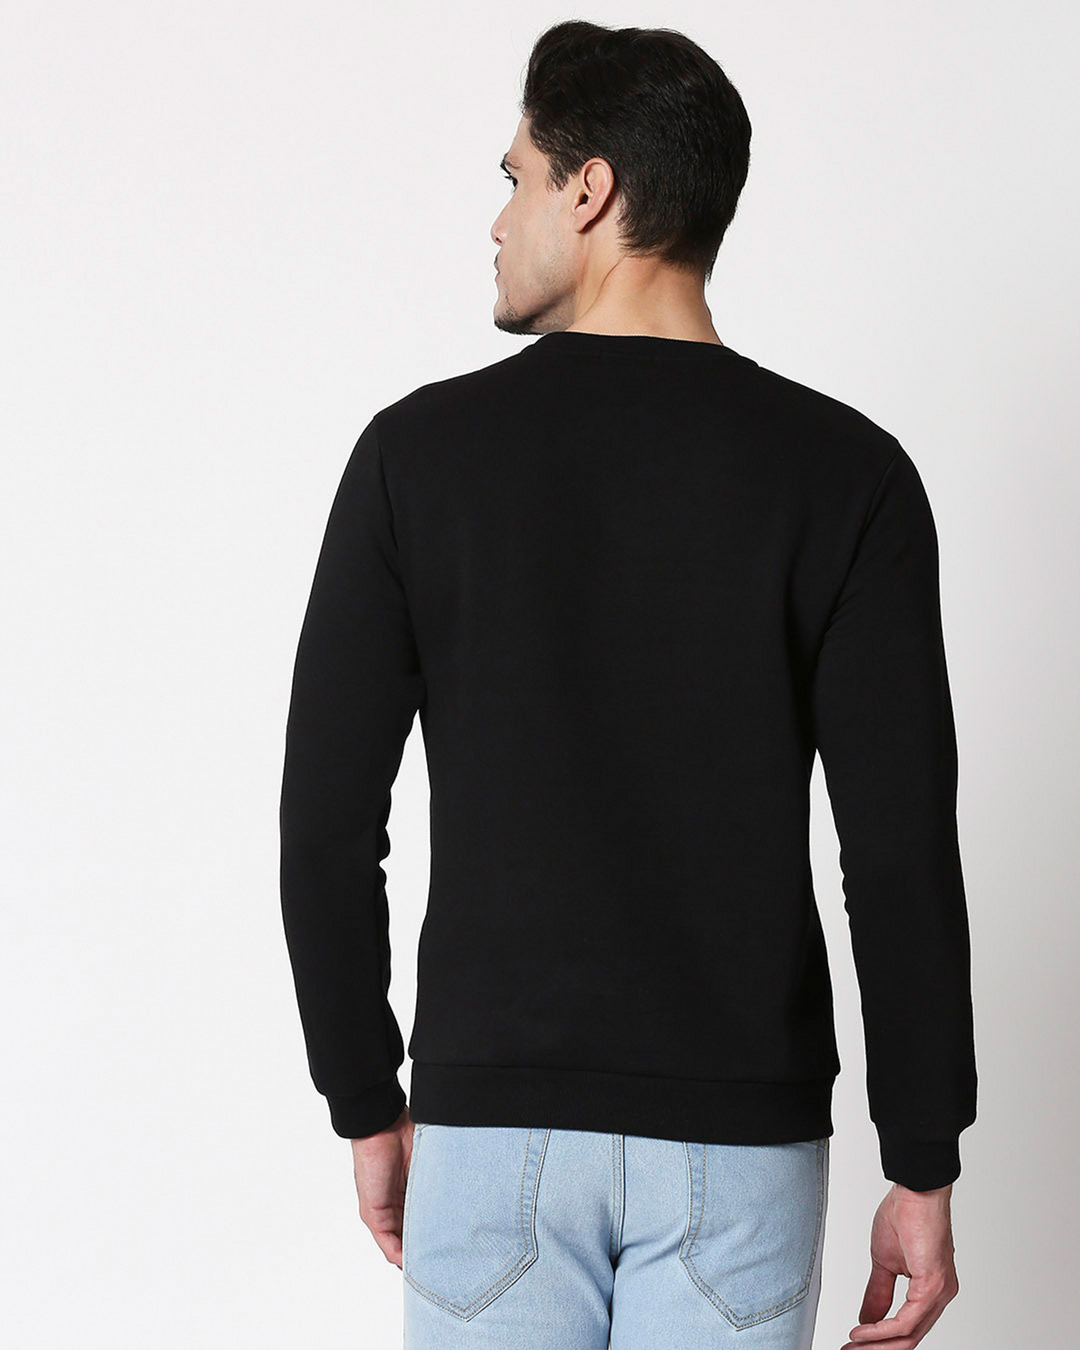 Shop High Colors Fleece Sweatshirt Black-Back